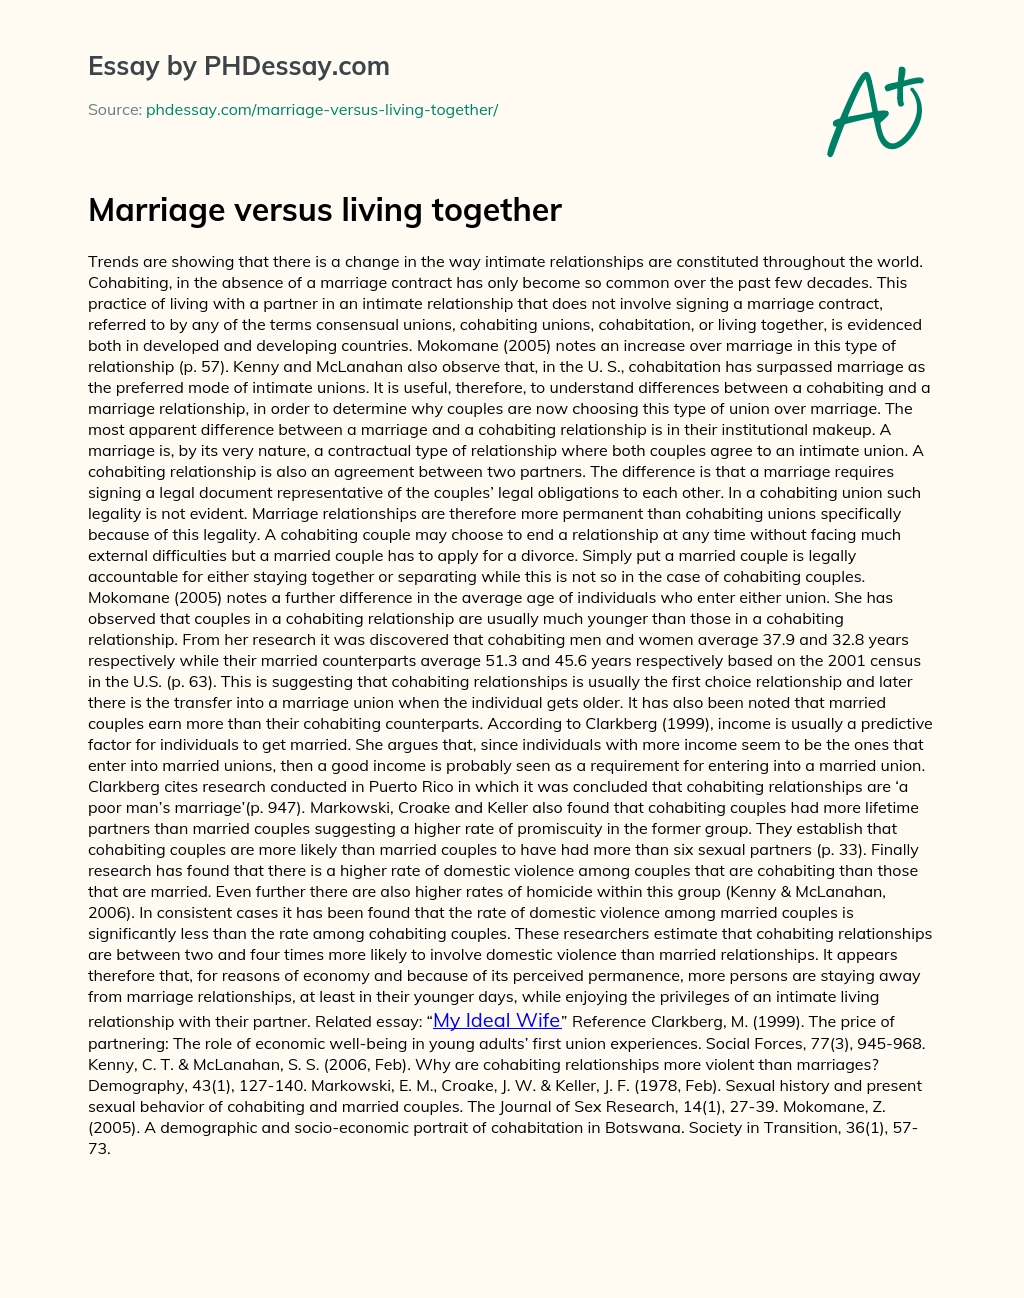 Marriage versus living together essay